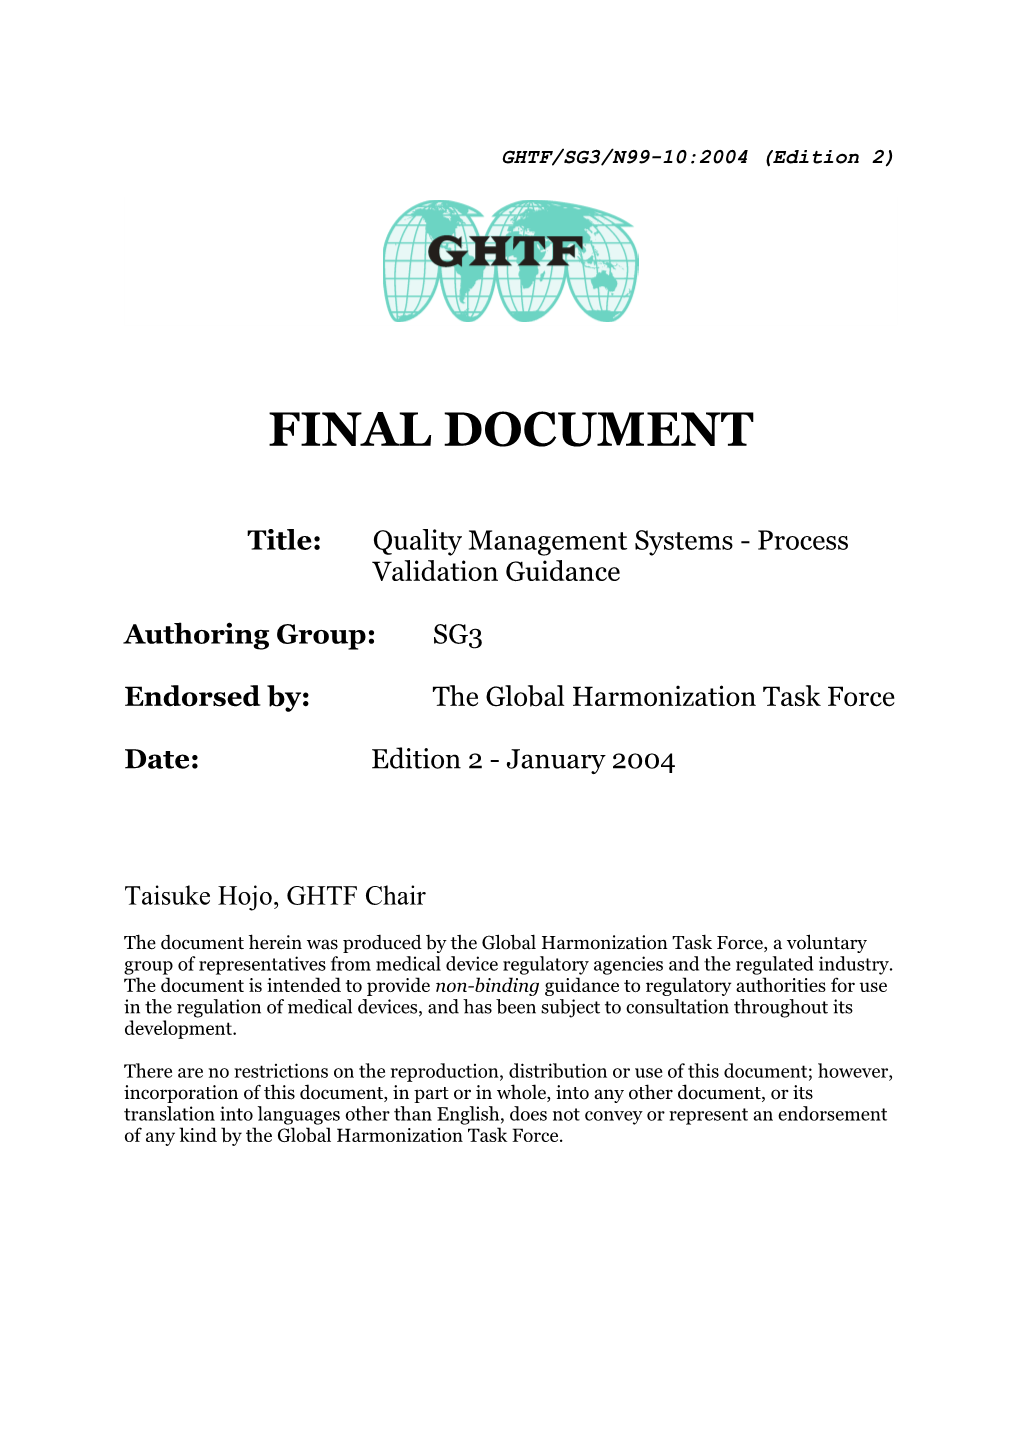 GHTF SG3 - QMS - Process Validation Guidance - January 2004